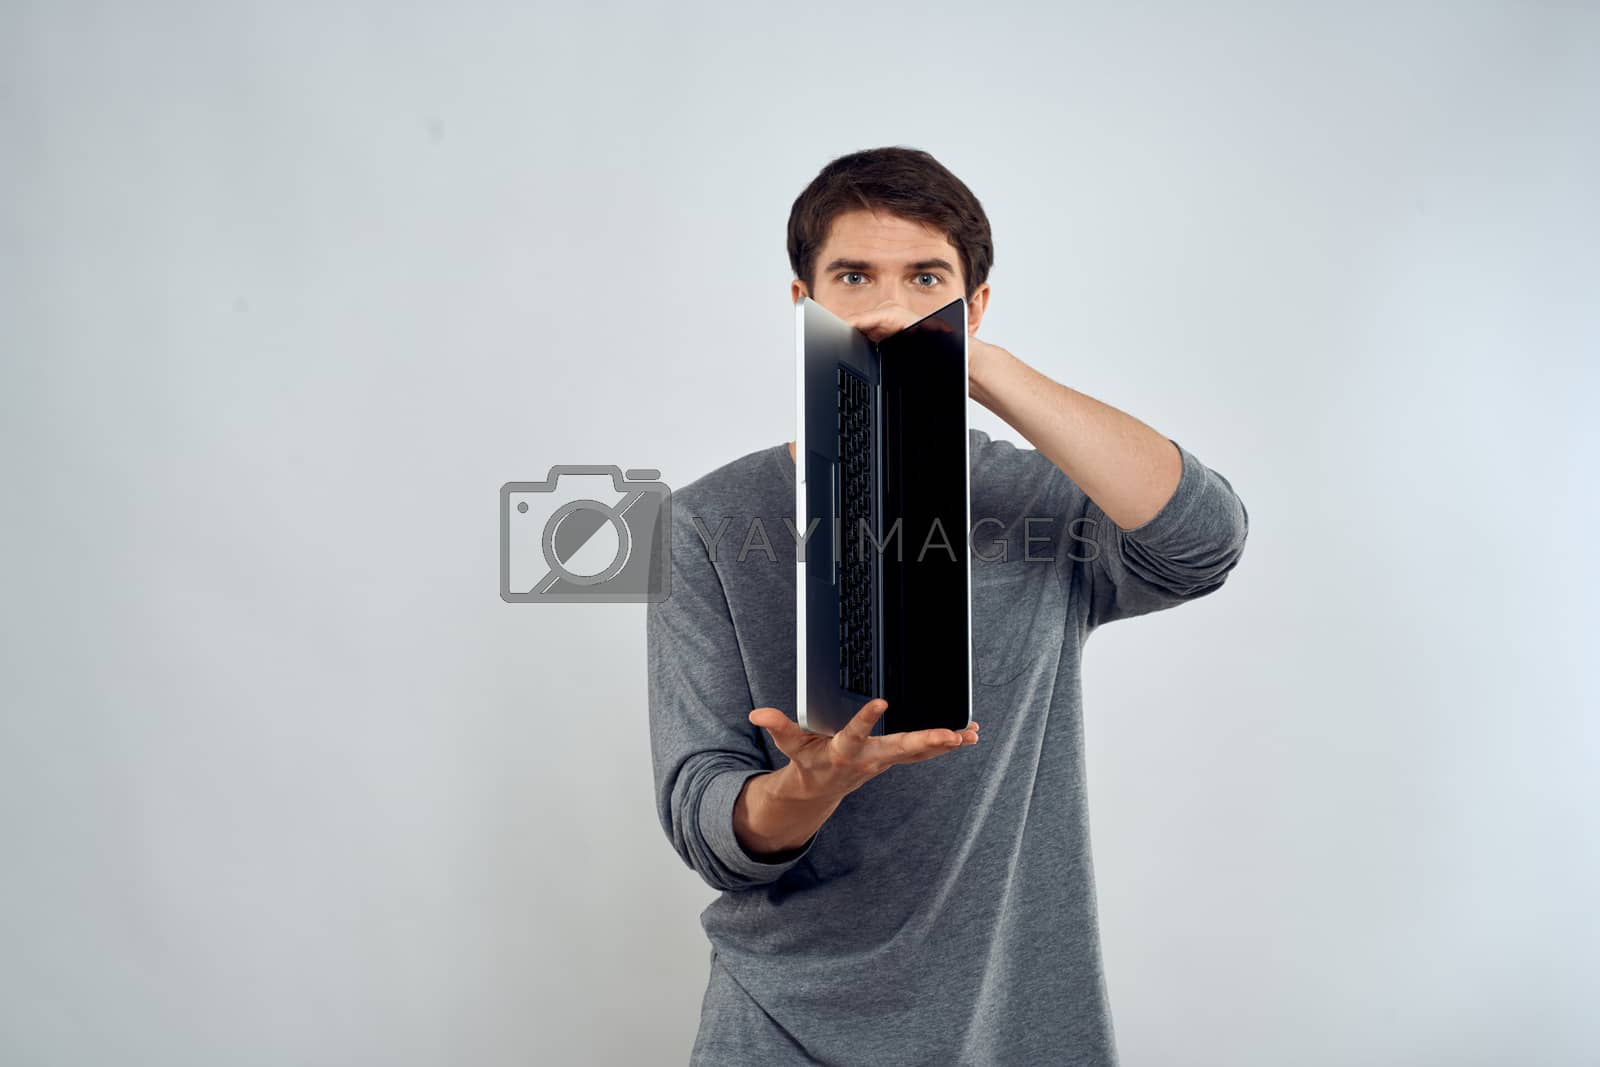 man holding laptop technology internet work communication light background. High quality photo